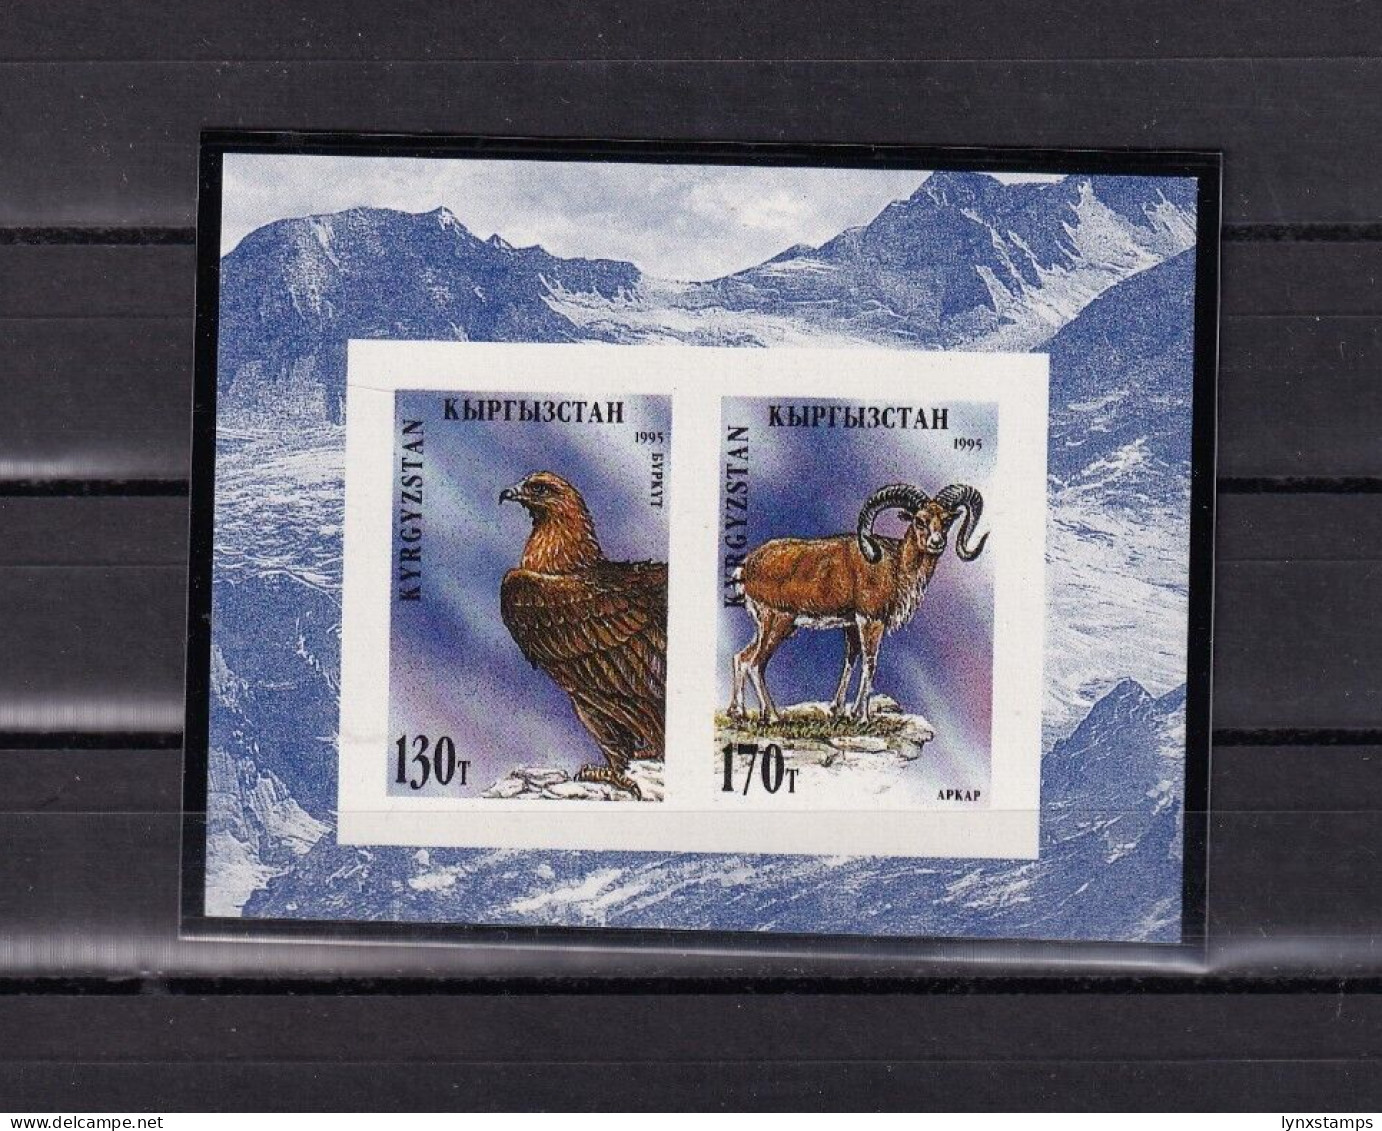 SA01 Kyrgyzstan 1995 Fauna Of Kyrgyzstan Imperforated Mini Sheet Mint - Kirghizstan